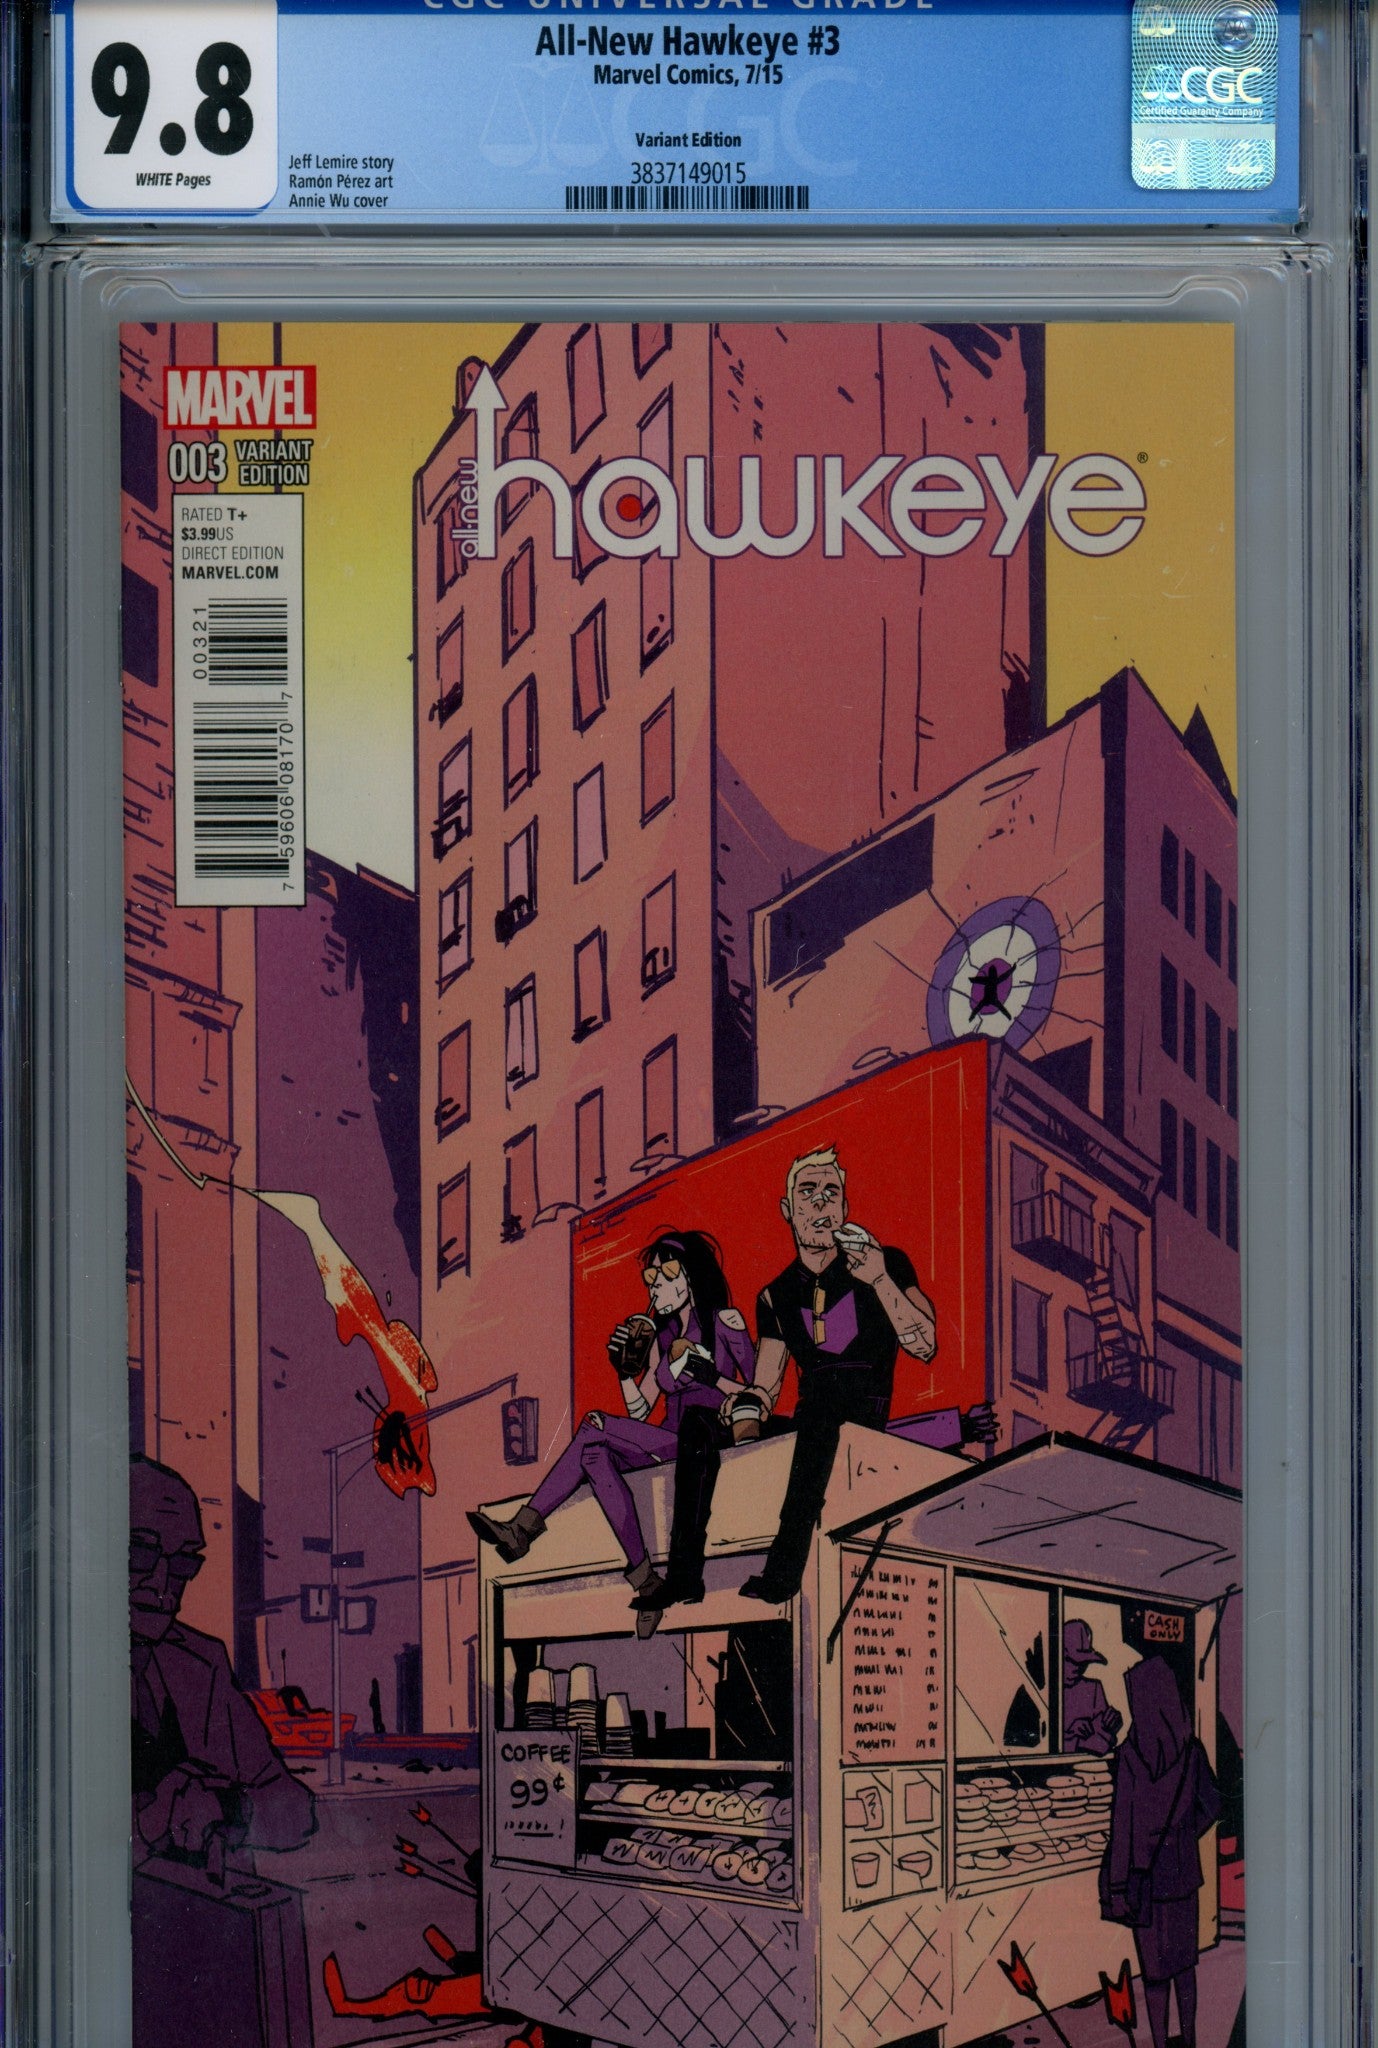 All-New Hawkeye Vol 1 3 Wu Incentive Variant CGC 9.8 (2015)